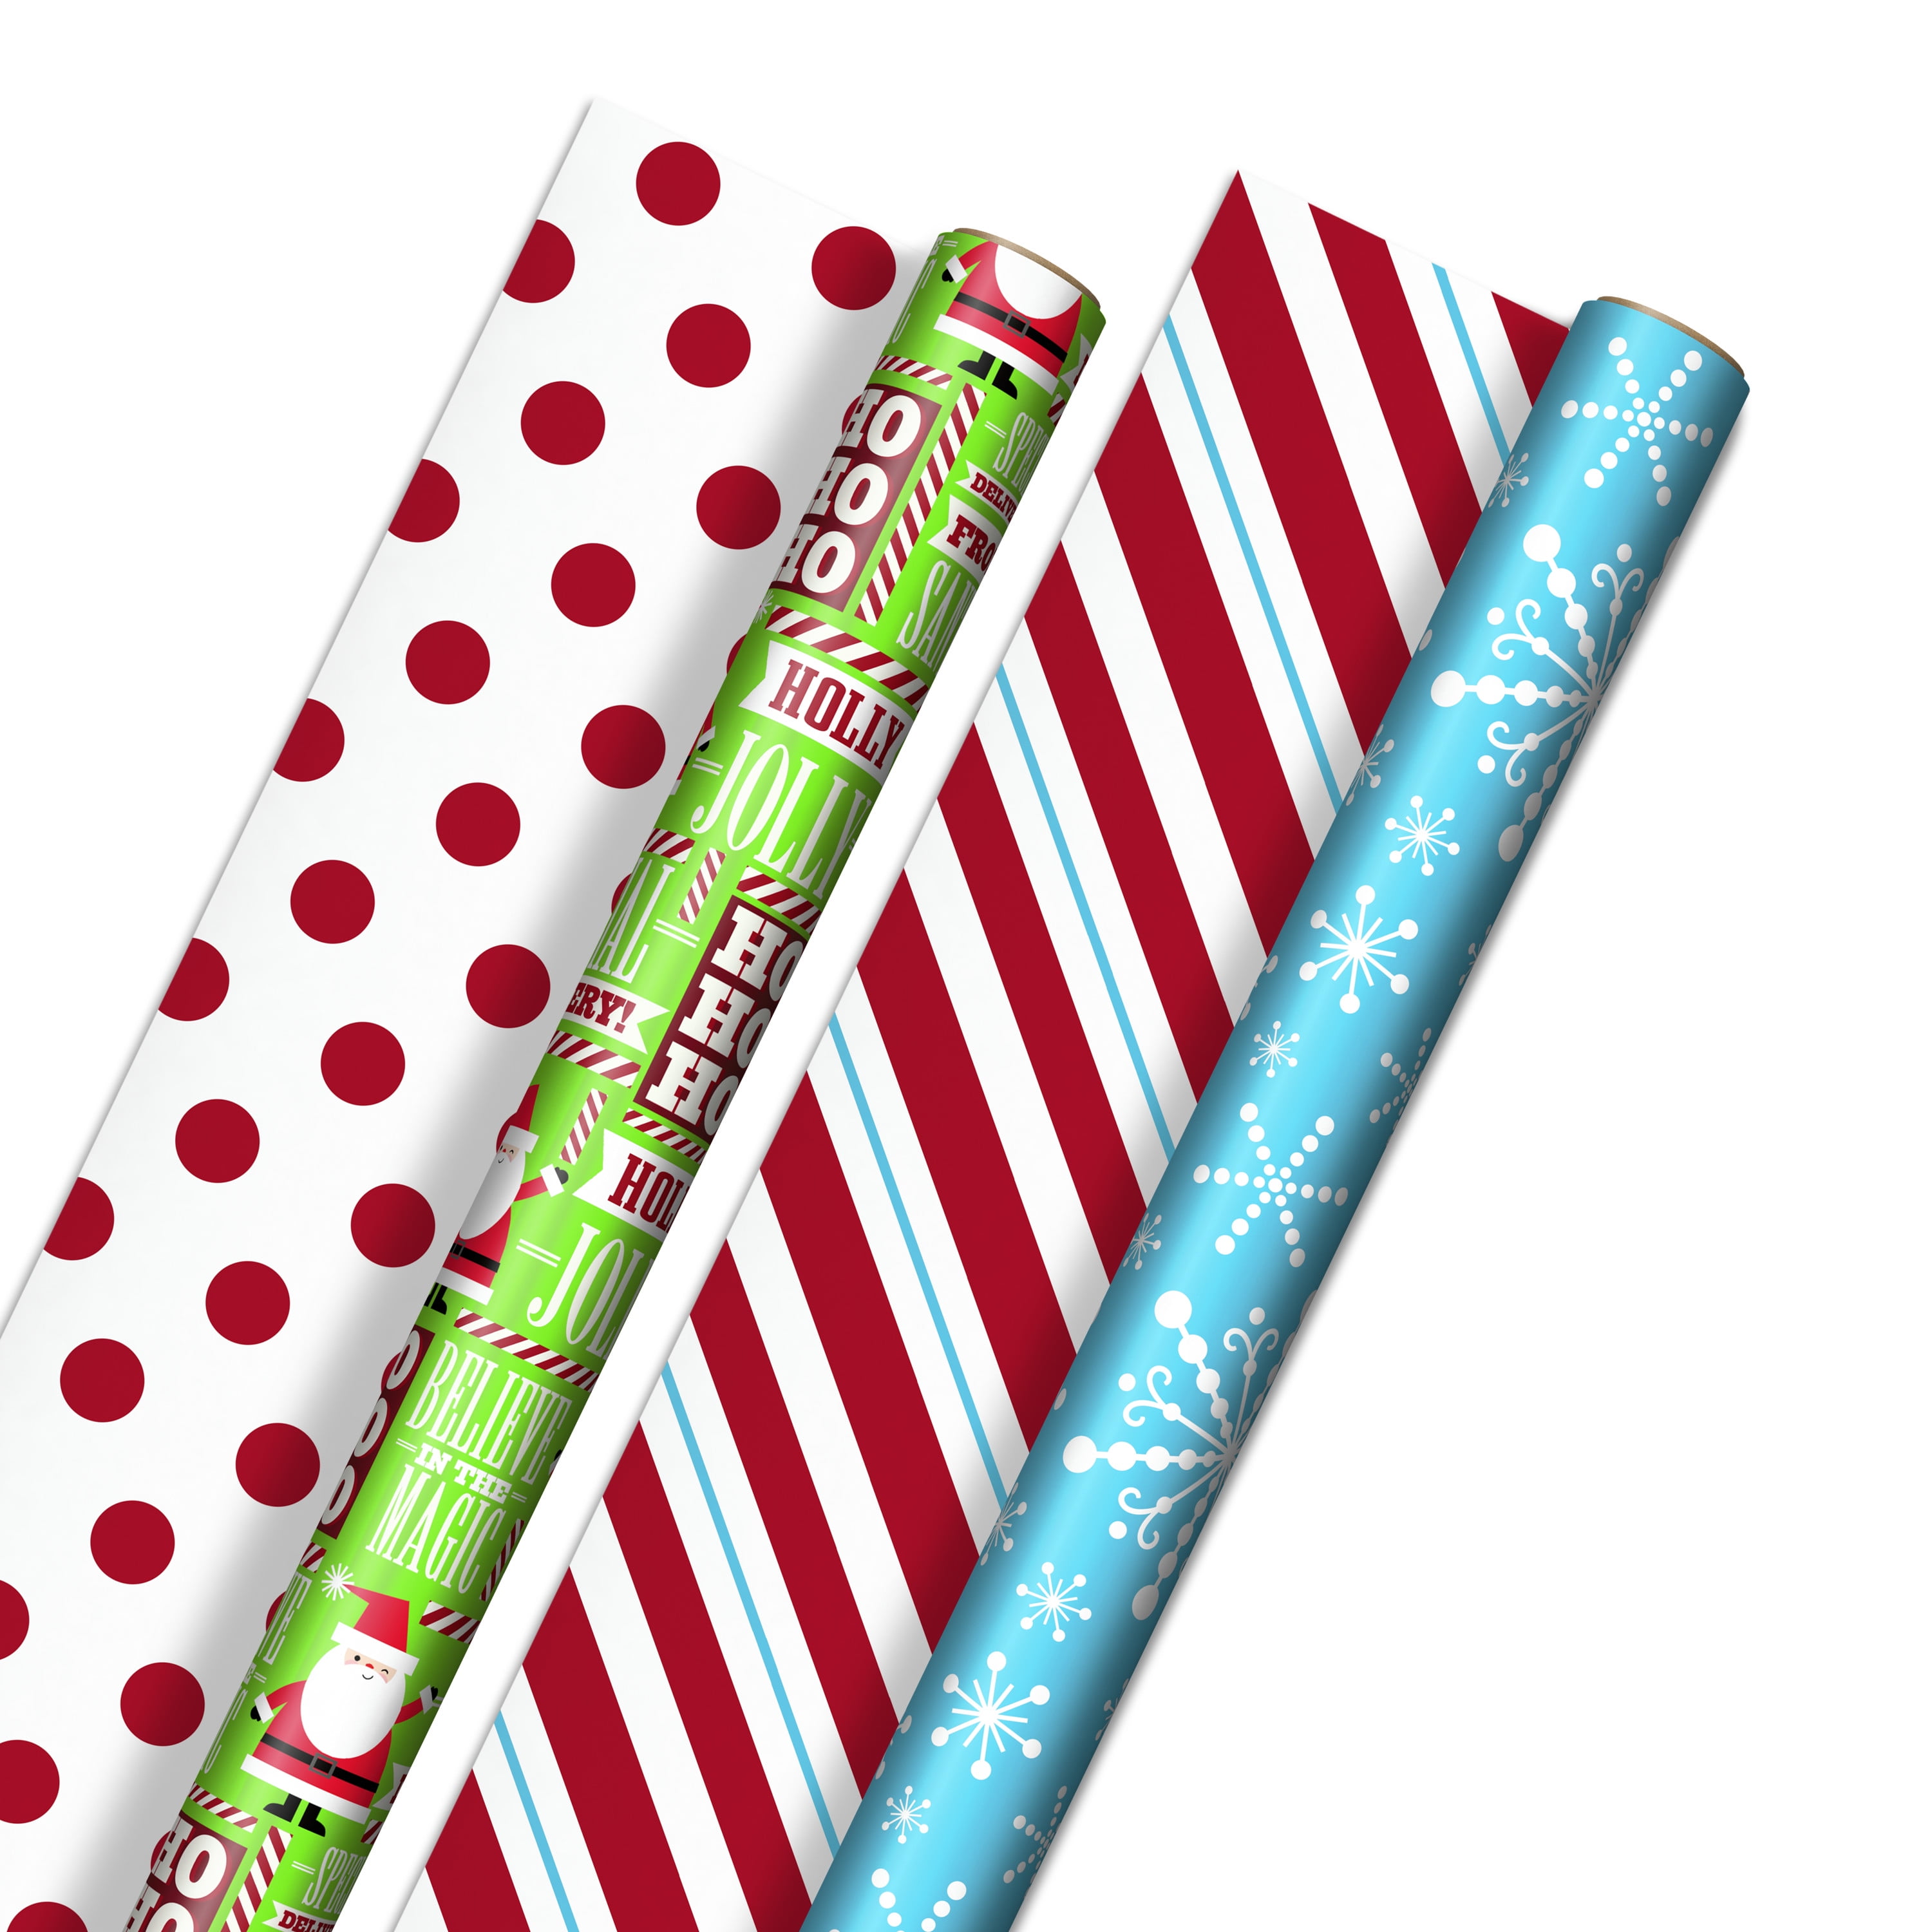 Hallmark Reversible Christmas Wrapping Paper for Kids - Bulk (2 Jumbo Rolls: 160 Sq. ft. ttl) Santa, Snowflakes, Stripes, Red Dots, Dual-Pack